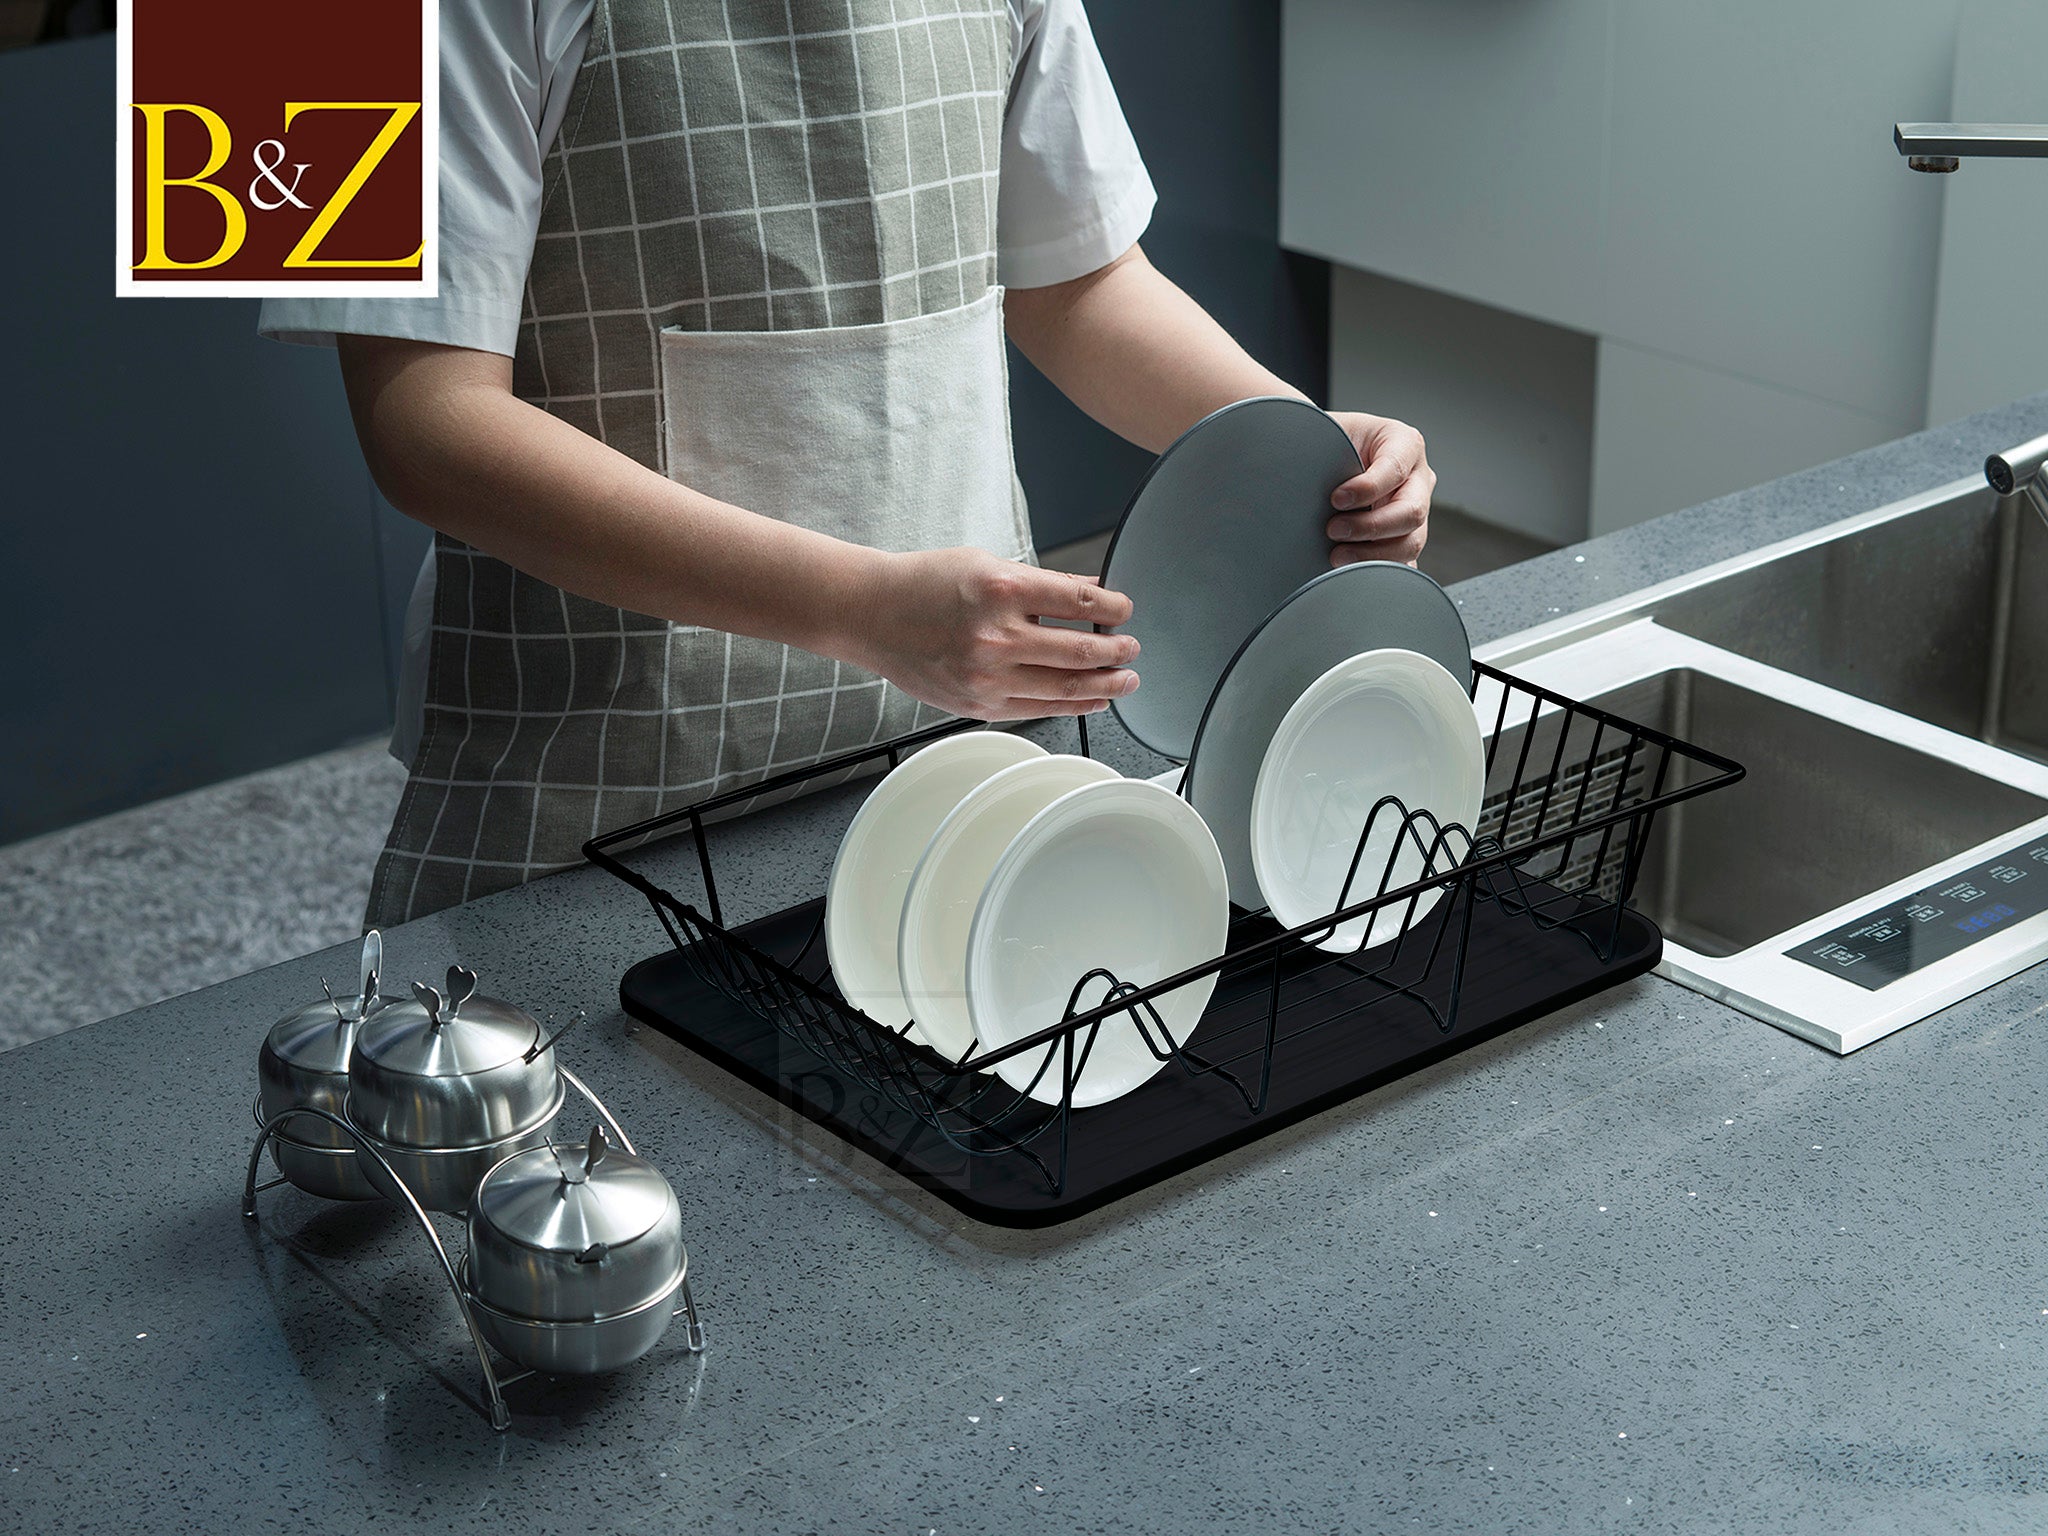 Large Plastic Kitchen Plate Dish Drainer Rack Draining Board Cutlery Holder  UK